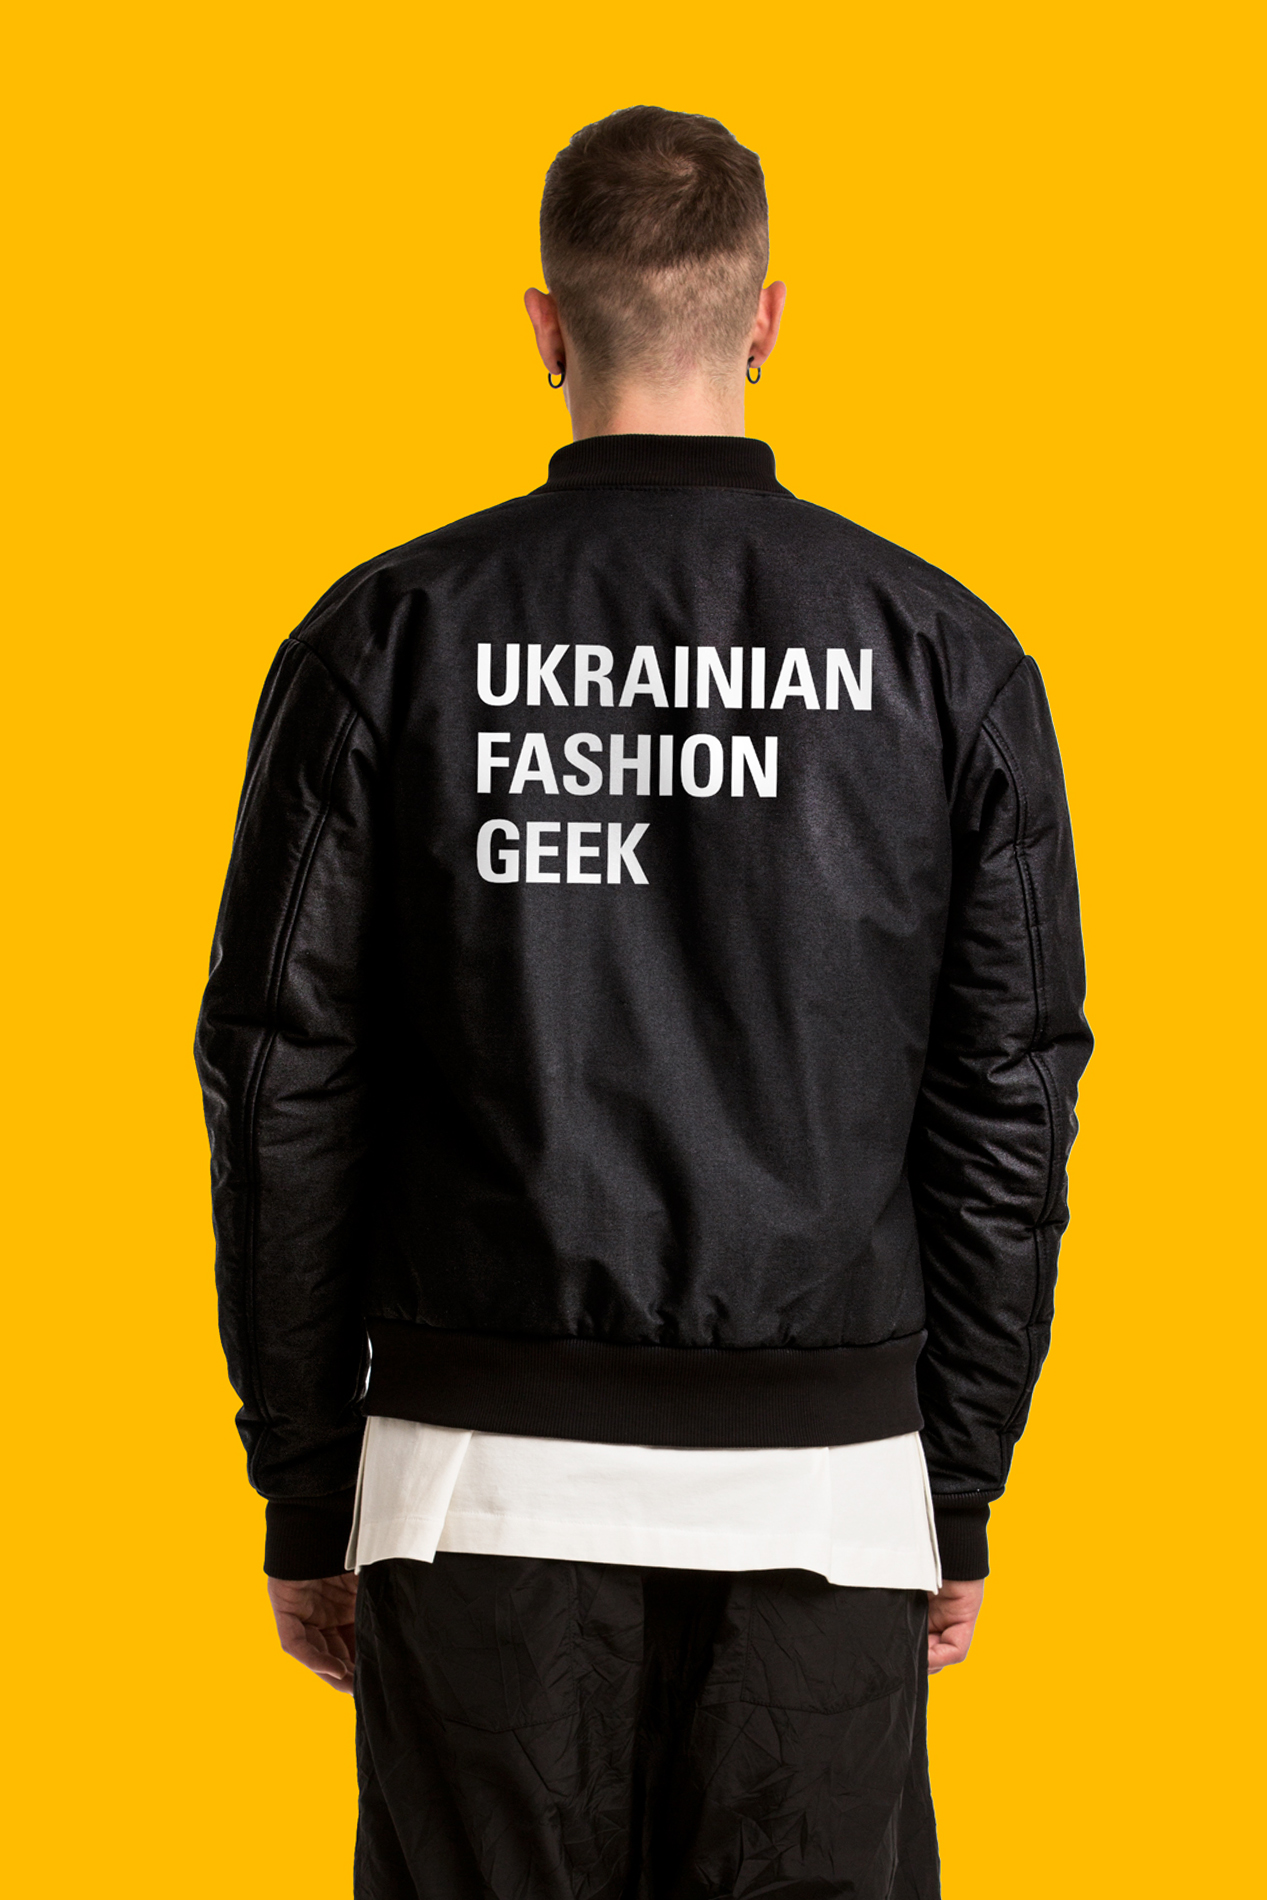 Demi-season puffed bomber with Ukrainian Fashion Geek print by FINCH